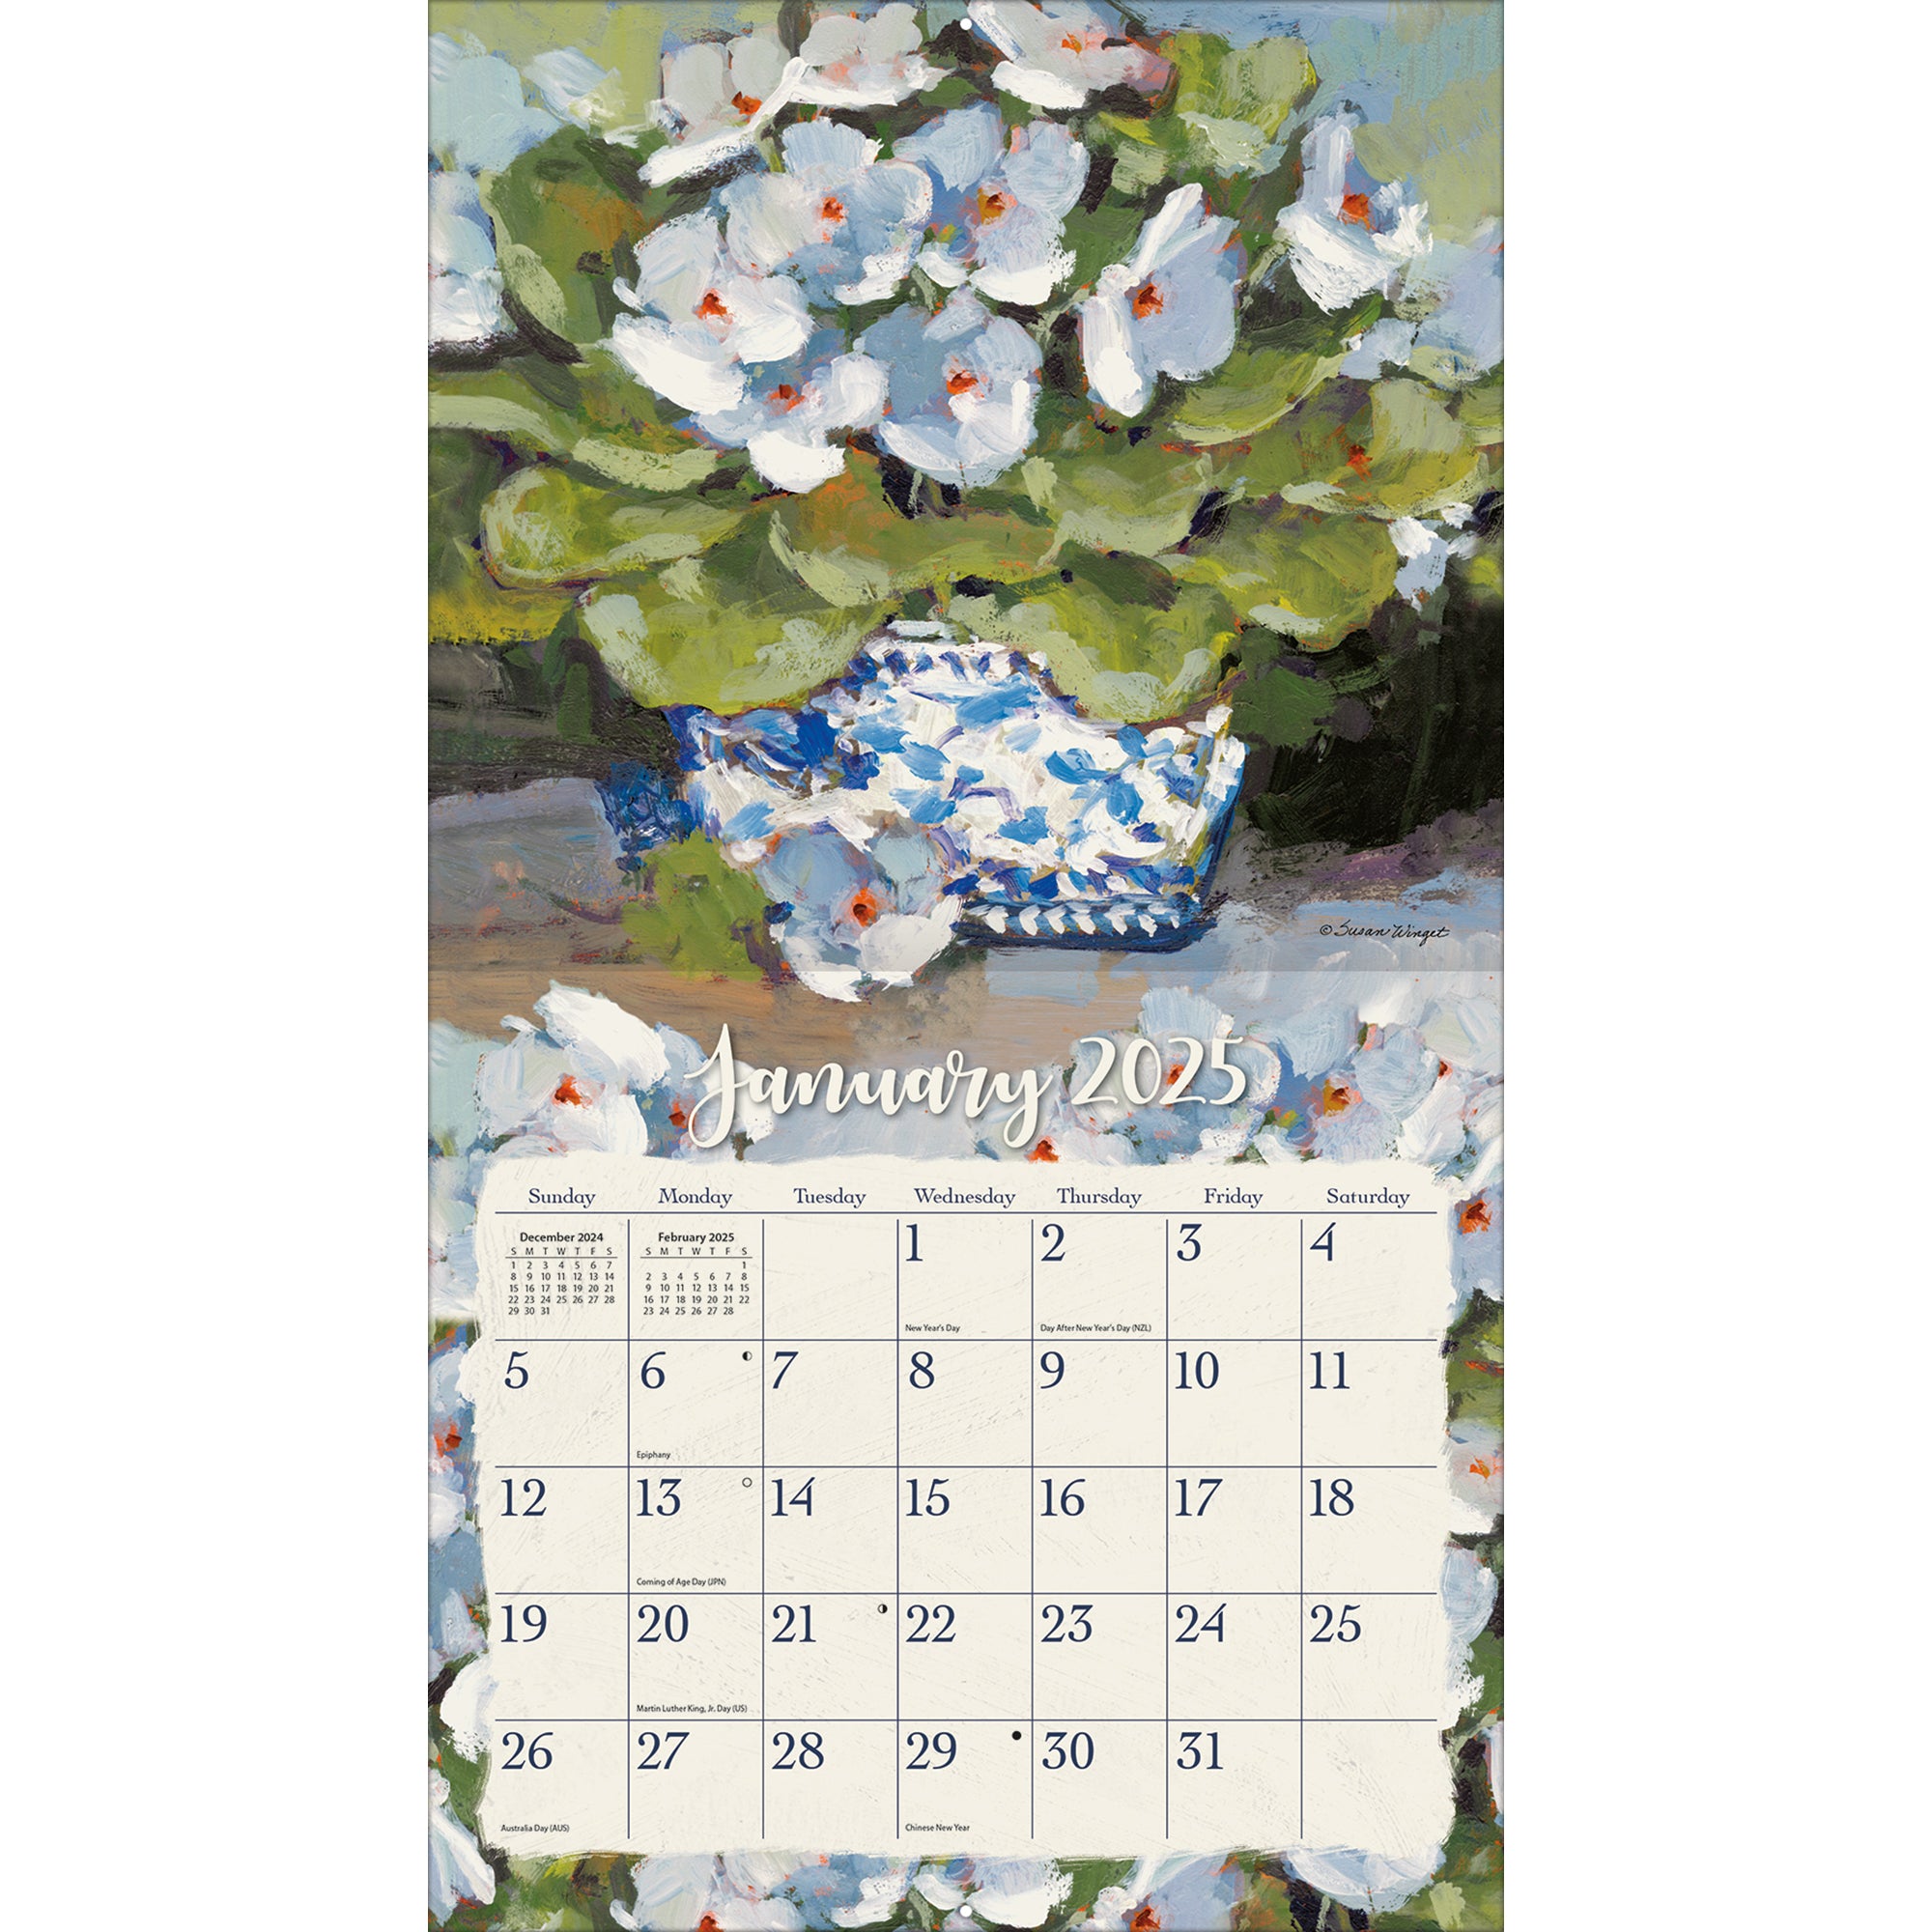 2025 Gallery Florals By Susan Winget - LANG Deluxe Wall Calendar